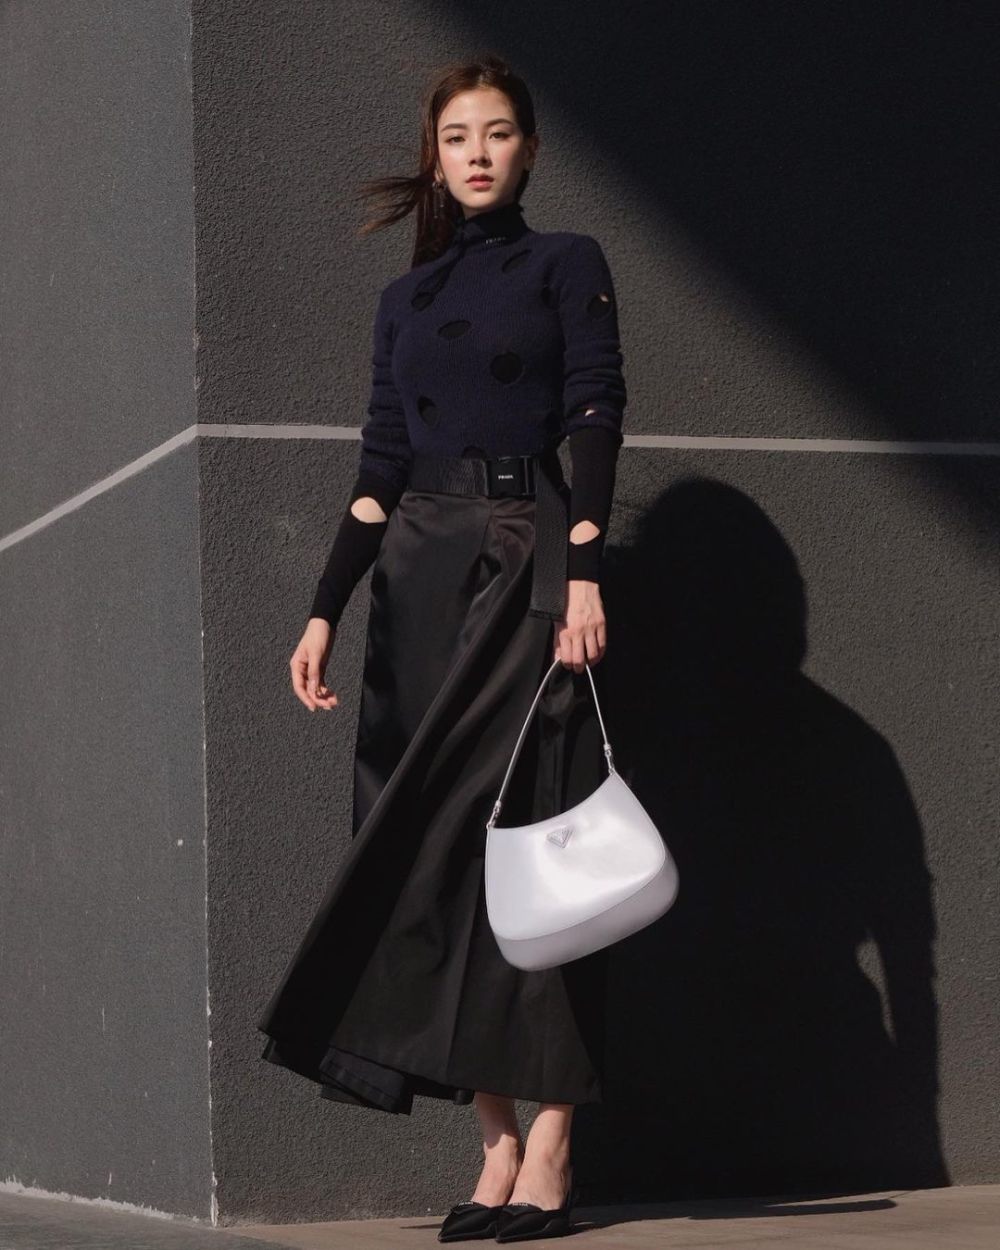 11 Ide Styling Black Outfit ala Baifern Pimchanok, Stunning!